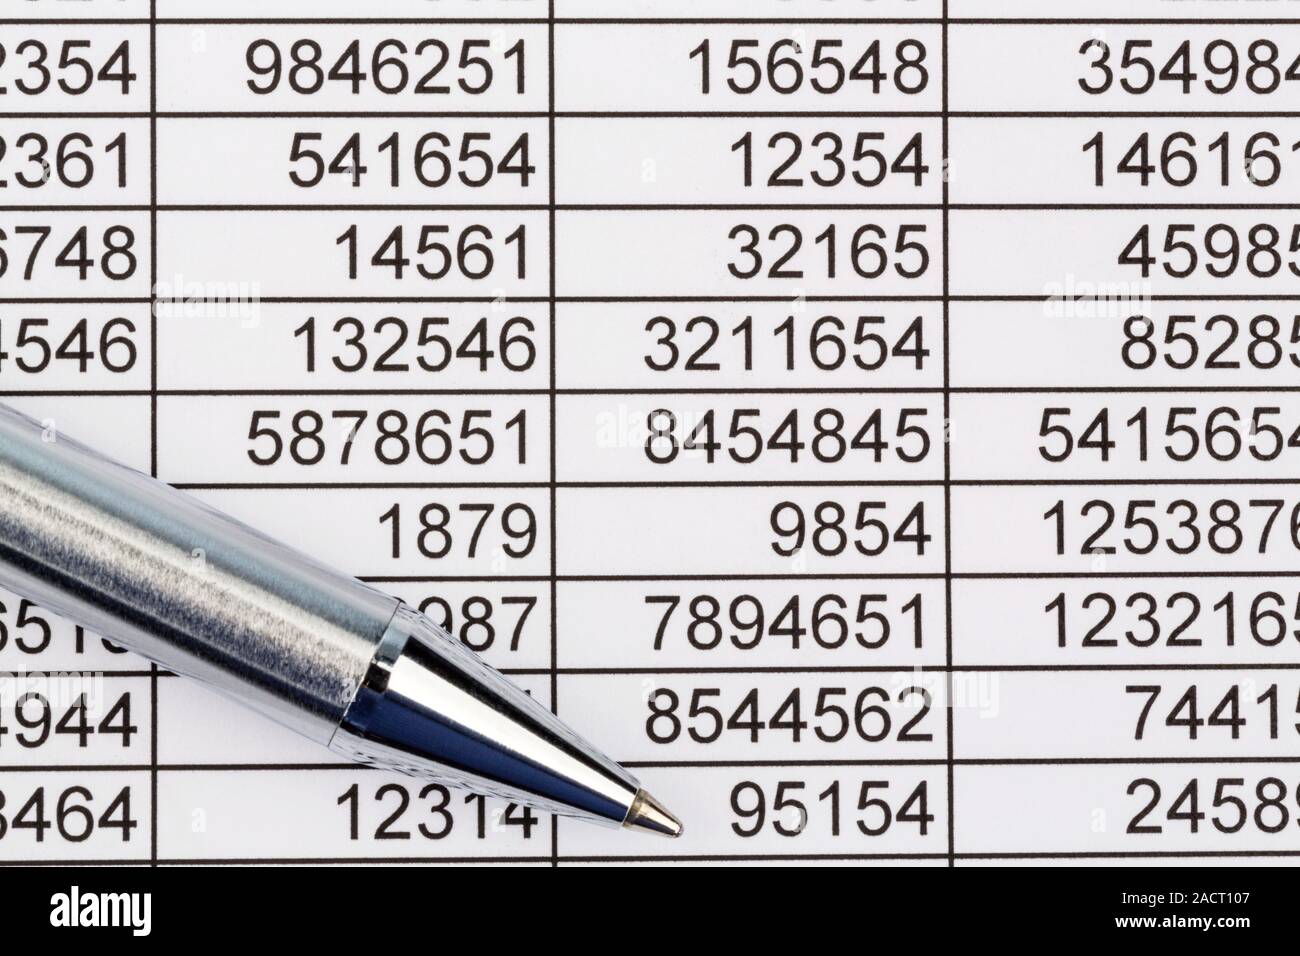 Calculators and statistics Stock Photo